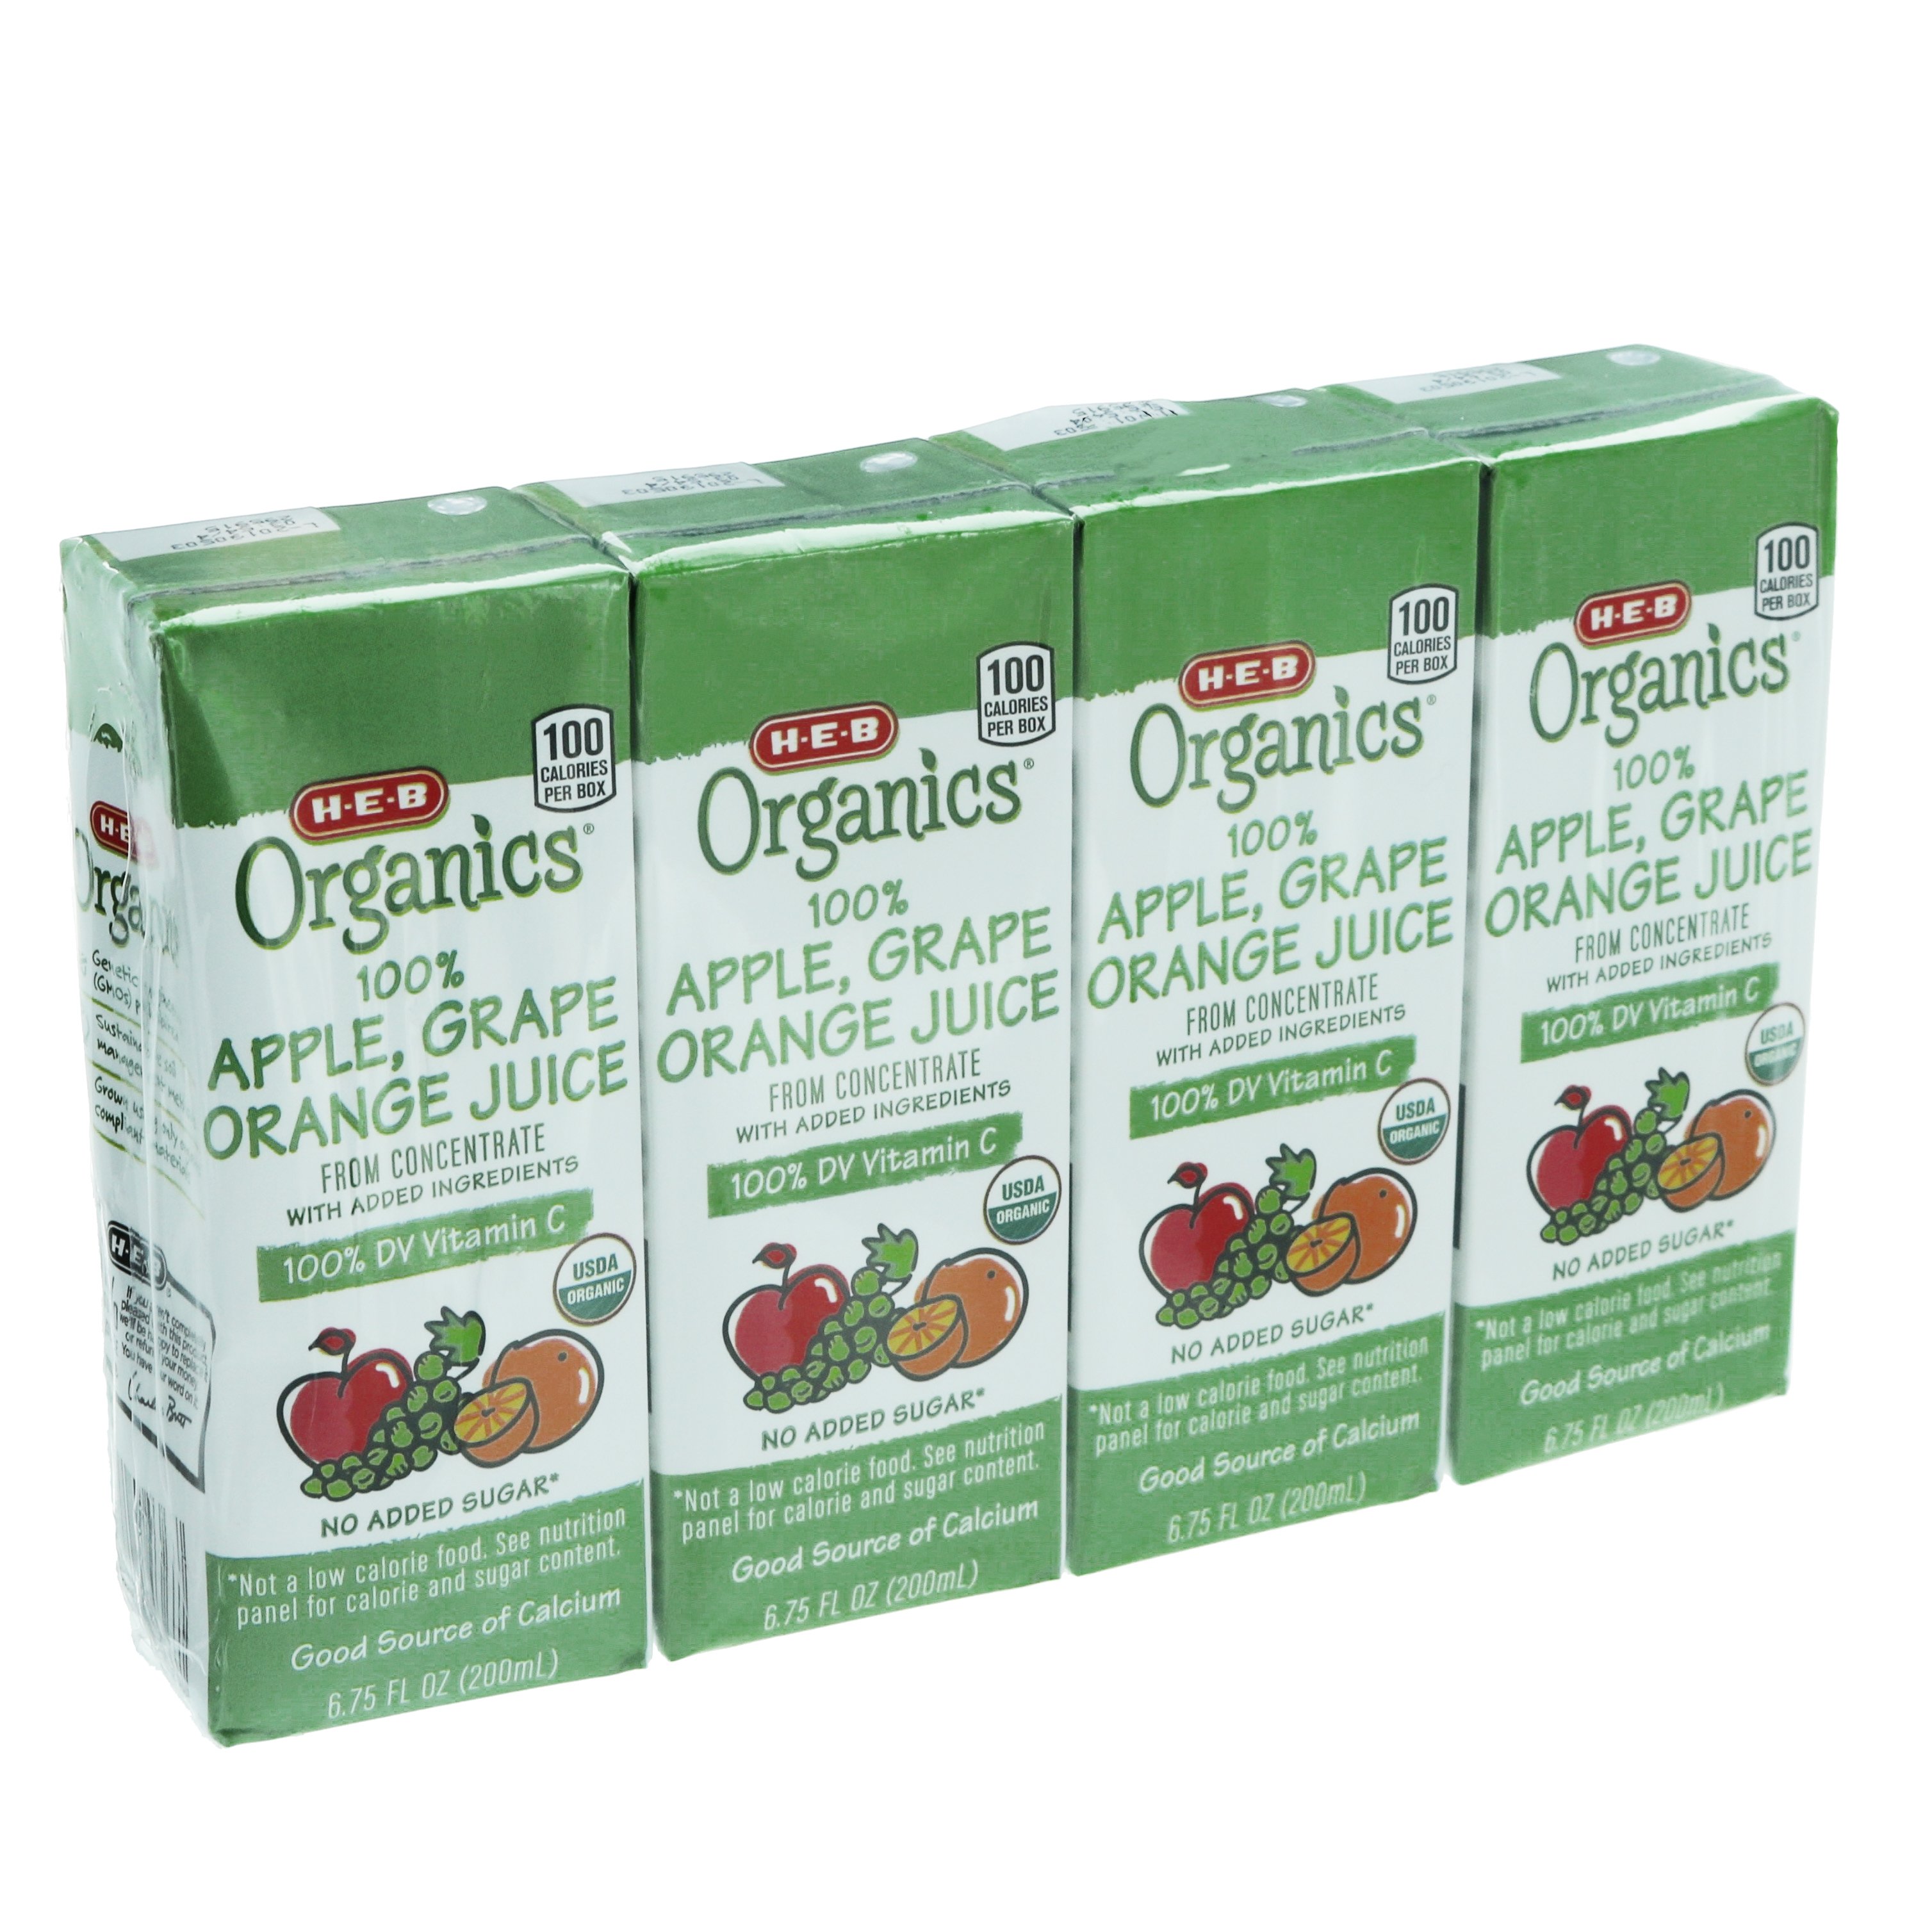 H E B Organics 100 Apple Grape Orange Juice 4pk Juice Boxes Shop